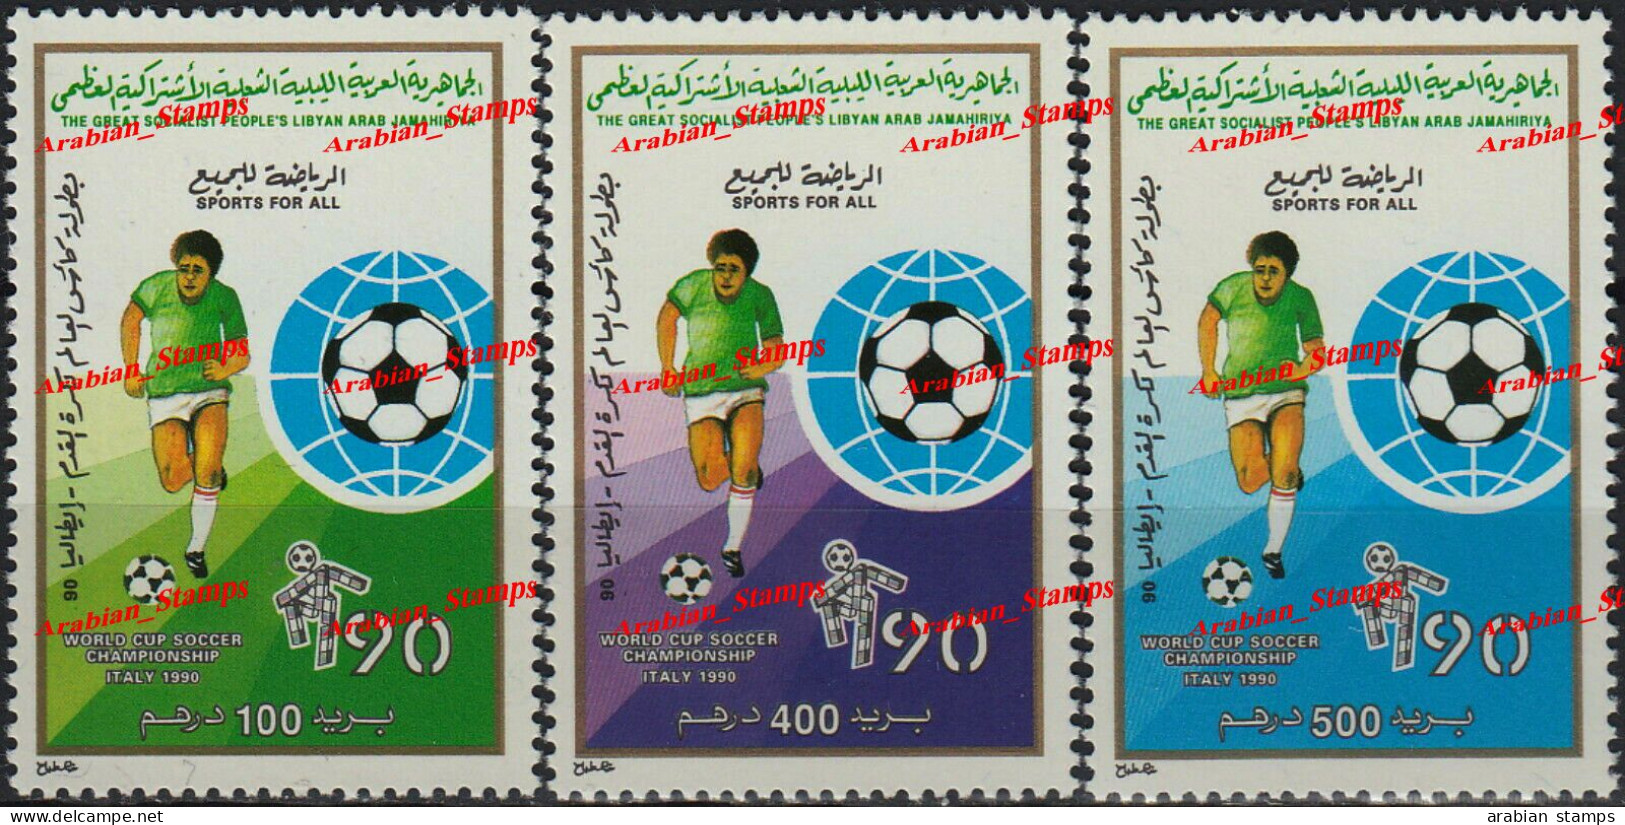 LIBYA 1990 SOCCER FOOTBALL WORLD CUP COUPE DU MONDE ITALY ITALIE SET MNH - Libyen